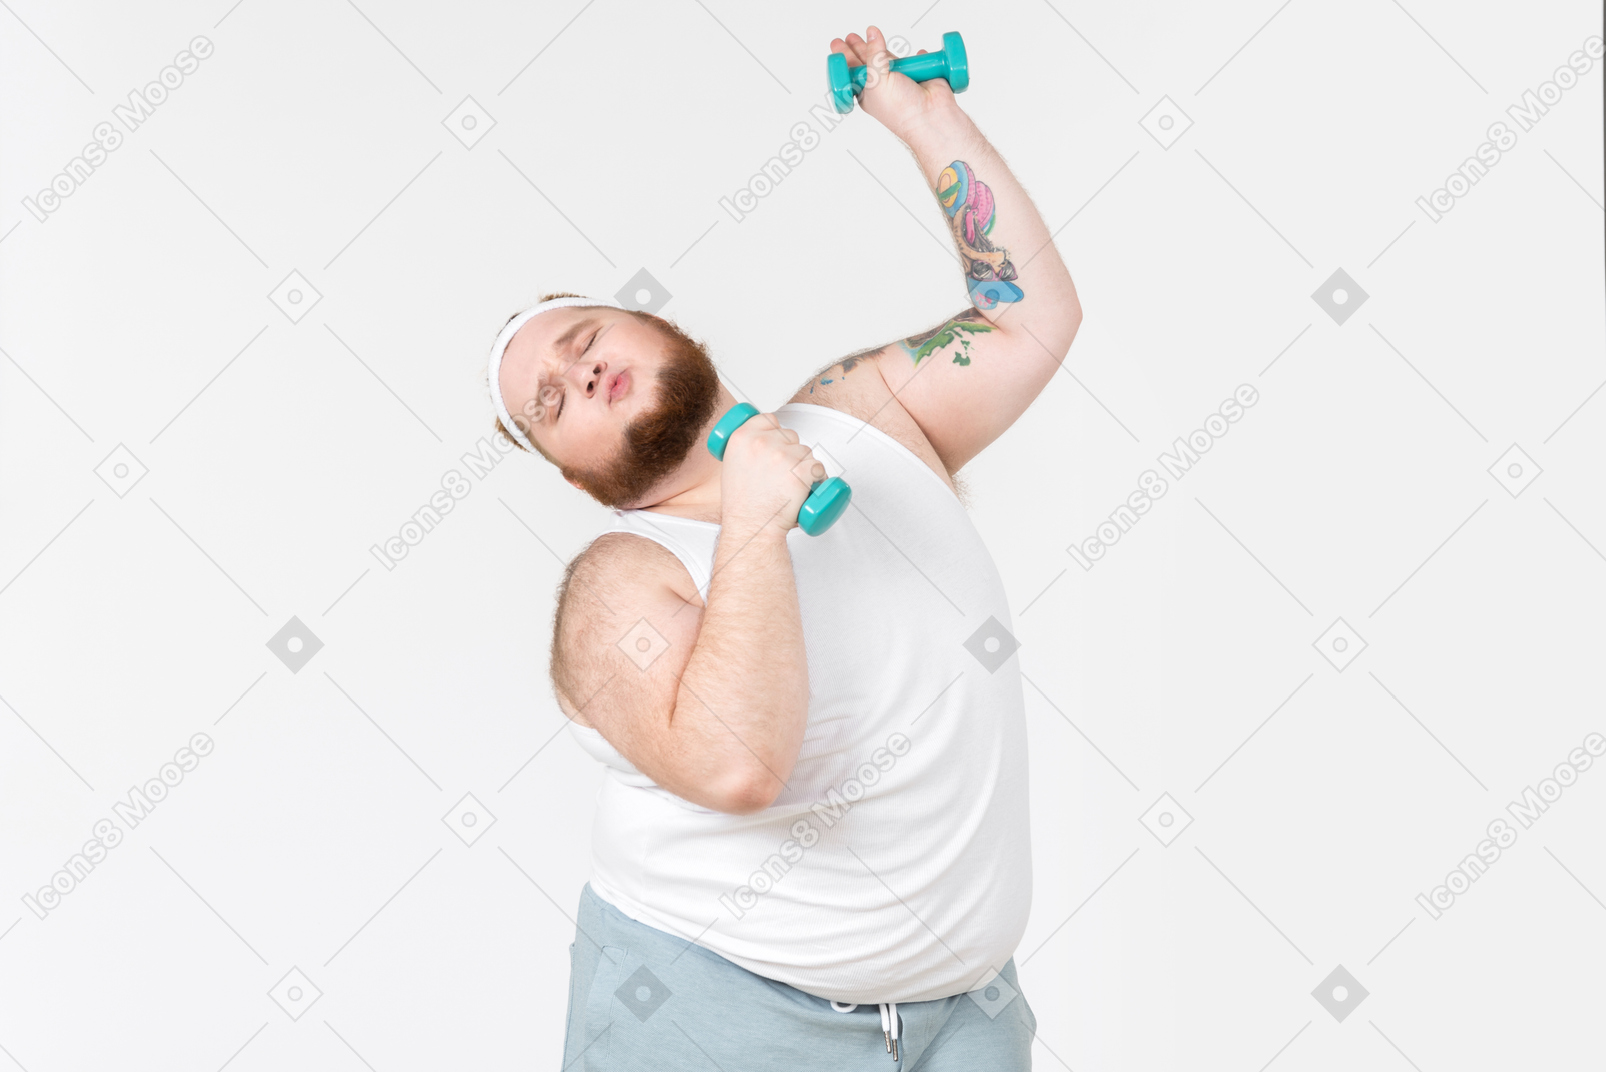 Big guy in sportswear singing using hand weights